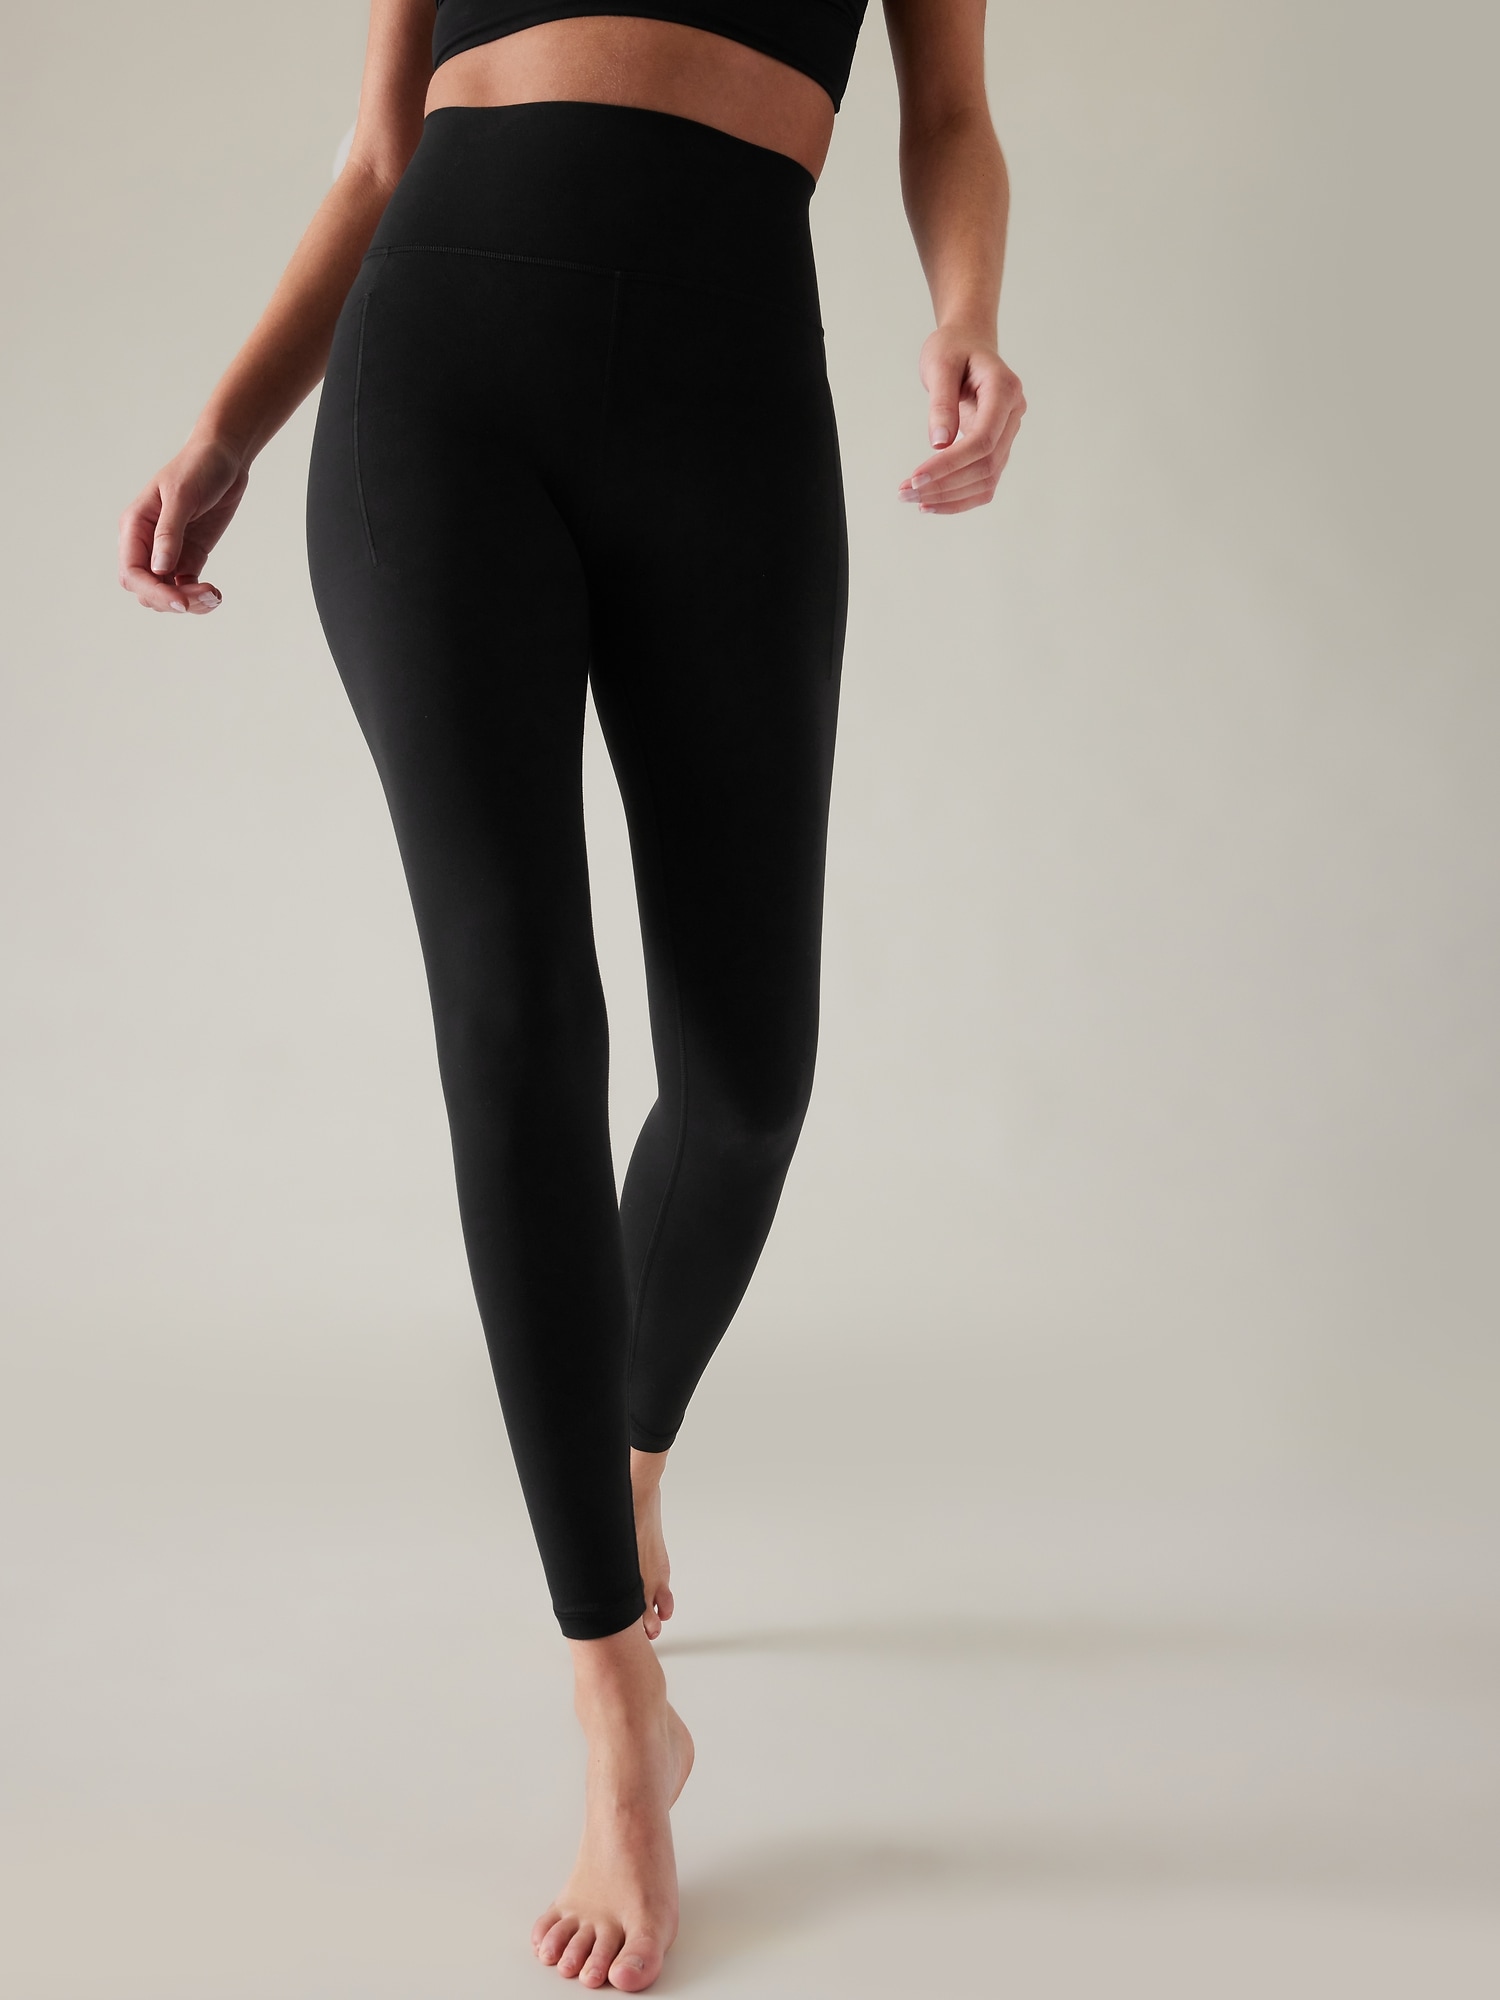 Cathalem Yoga Pants for Women Petite Length Exercise Yoga Waist Bubble  Running Yoga Pants for Women Tall Length Mesh Lift Pants Black Medium 